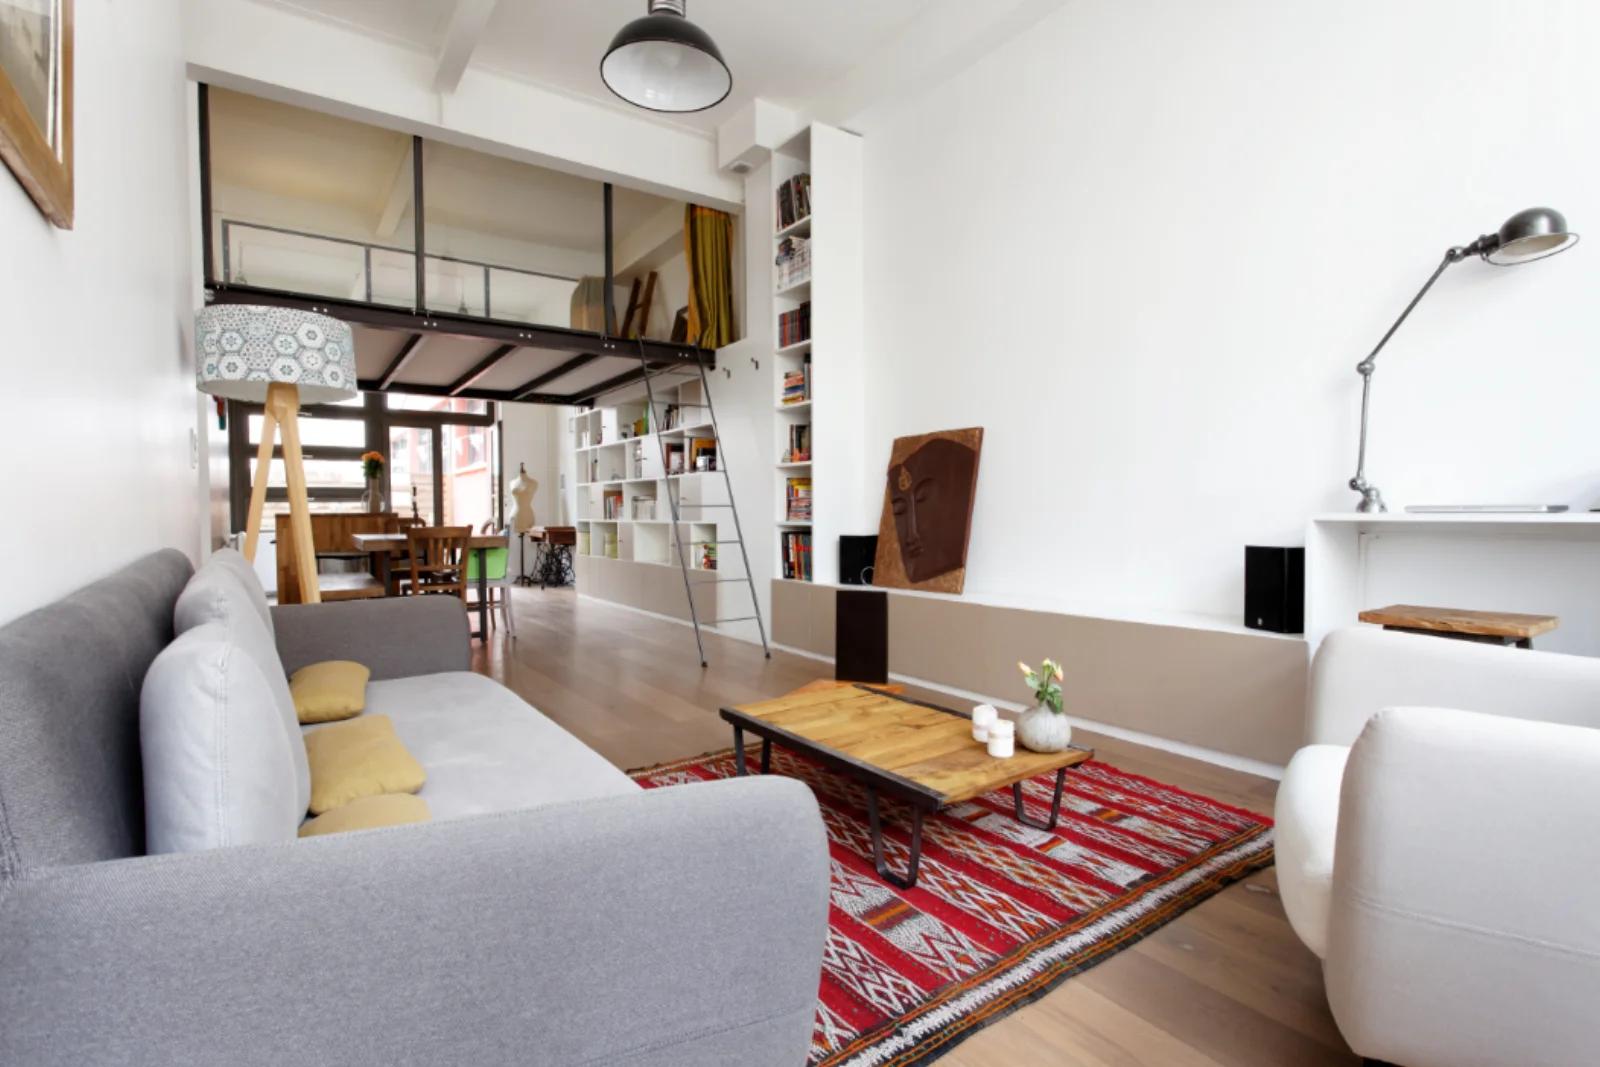 Living room in 6 bedrooms | terrace | architect's loft - 0